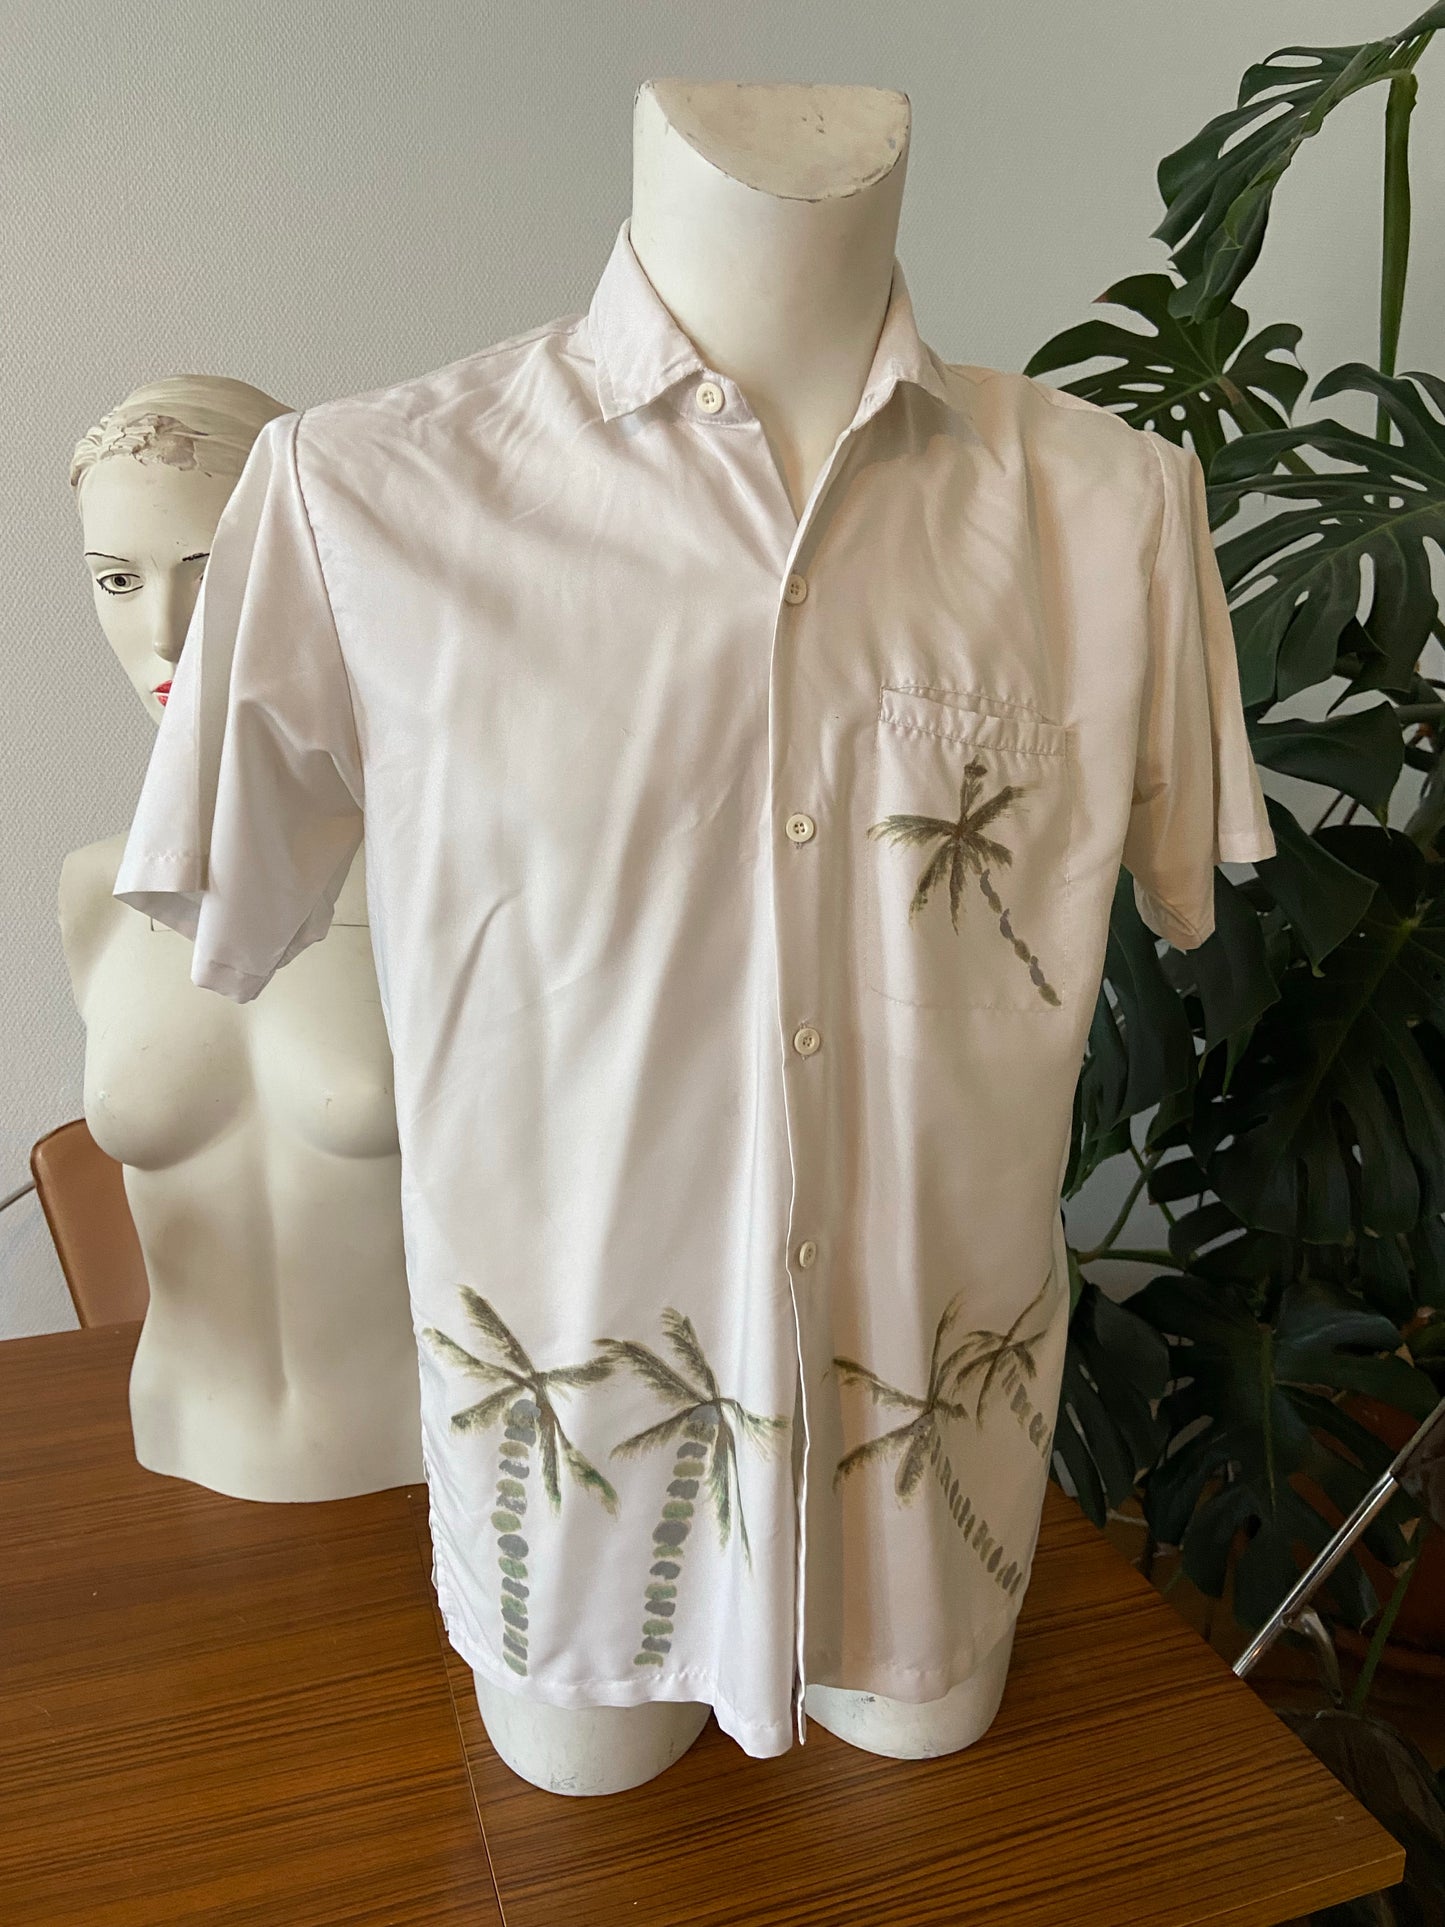 Palm tree shirt